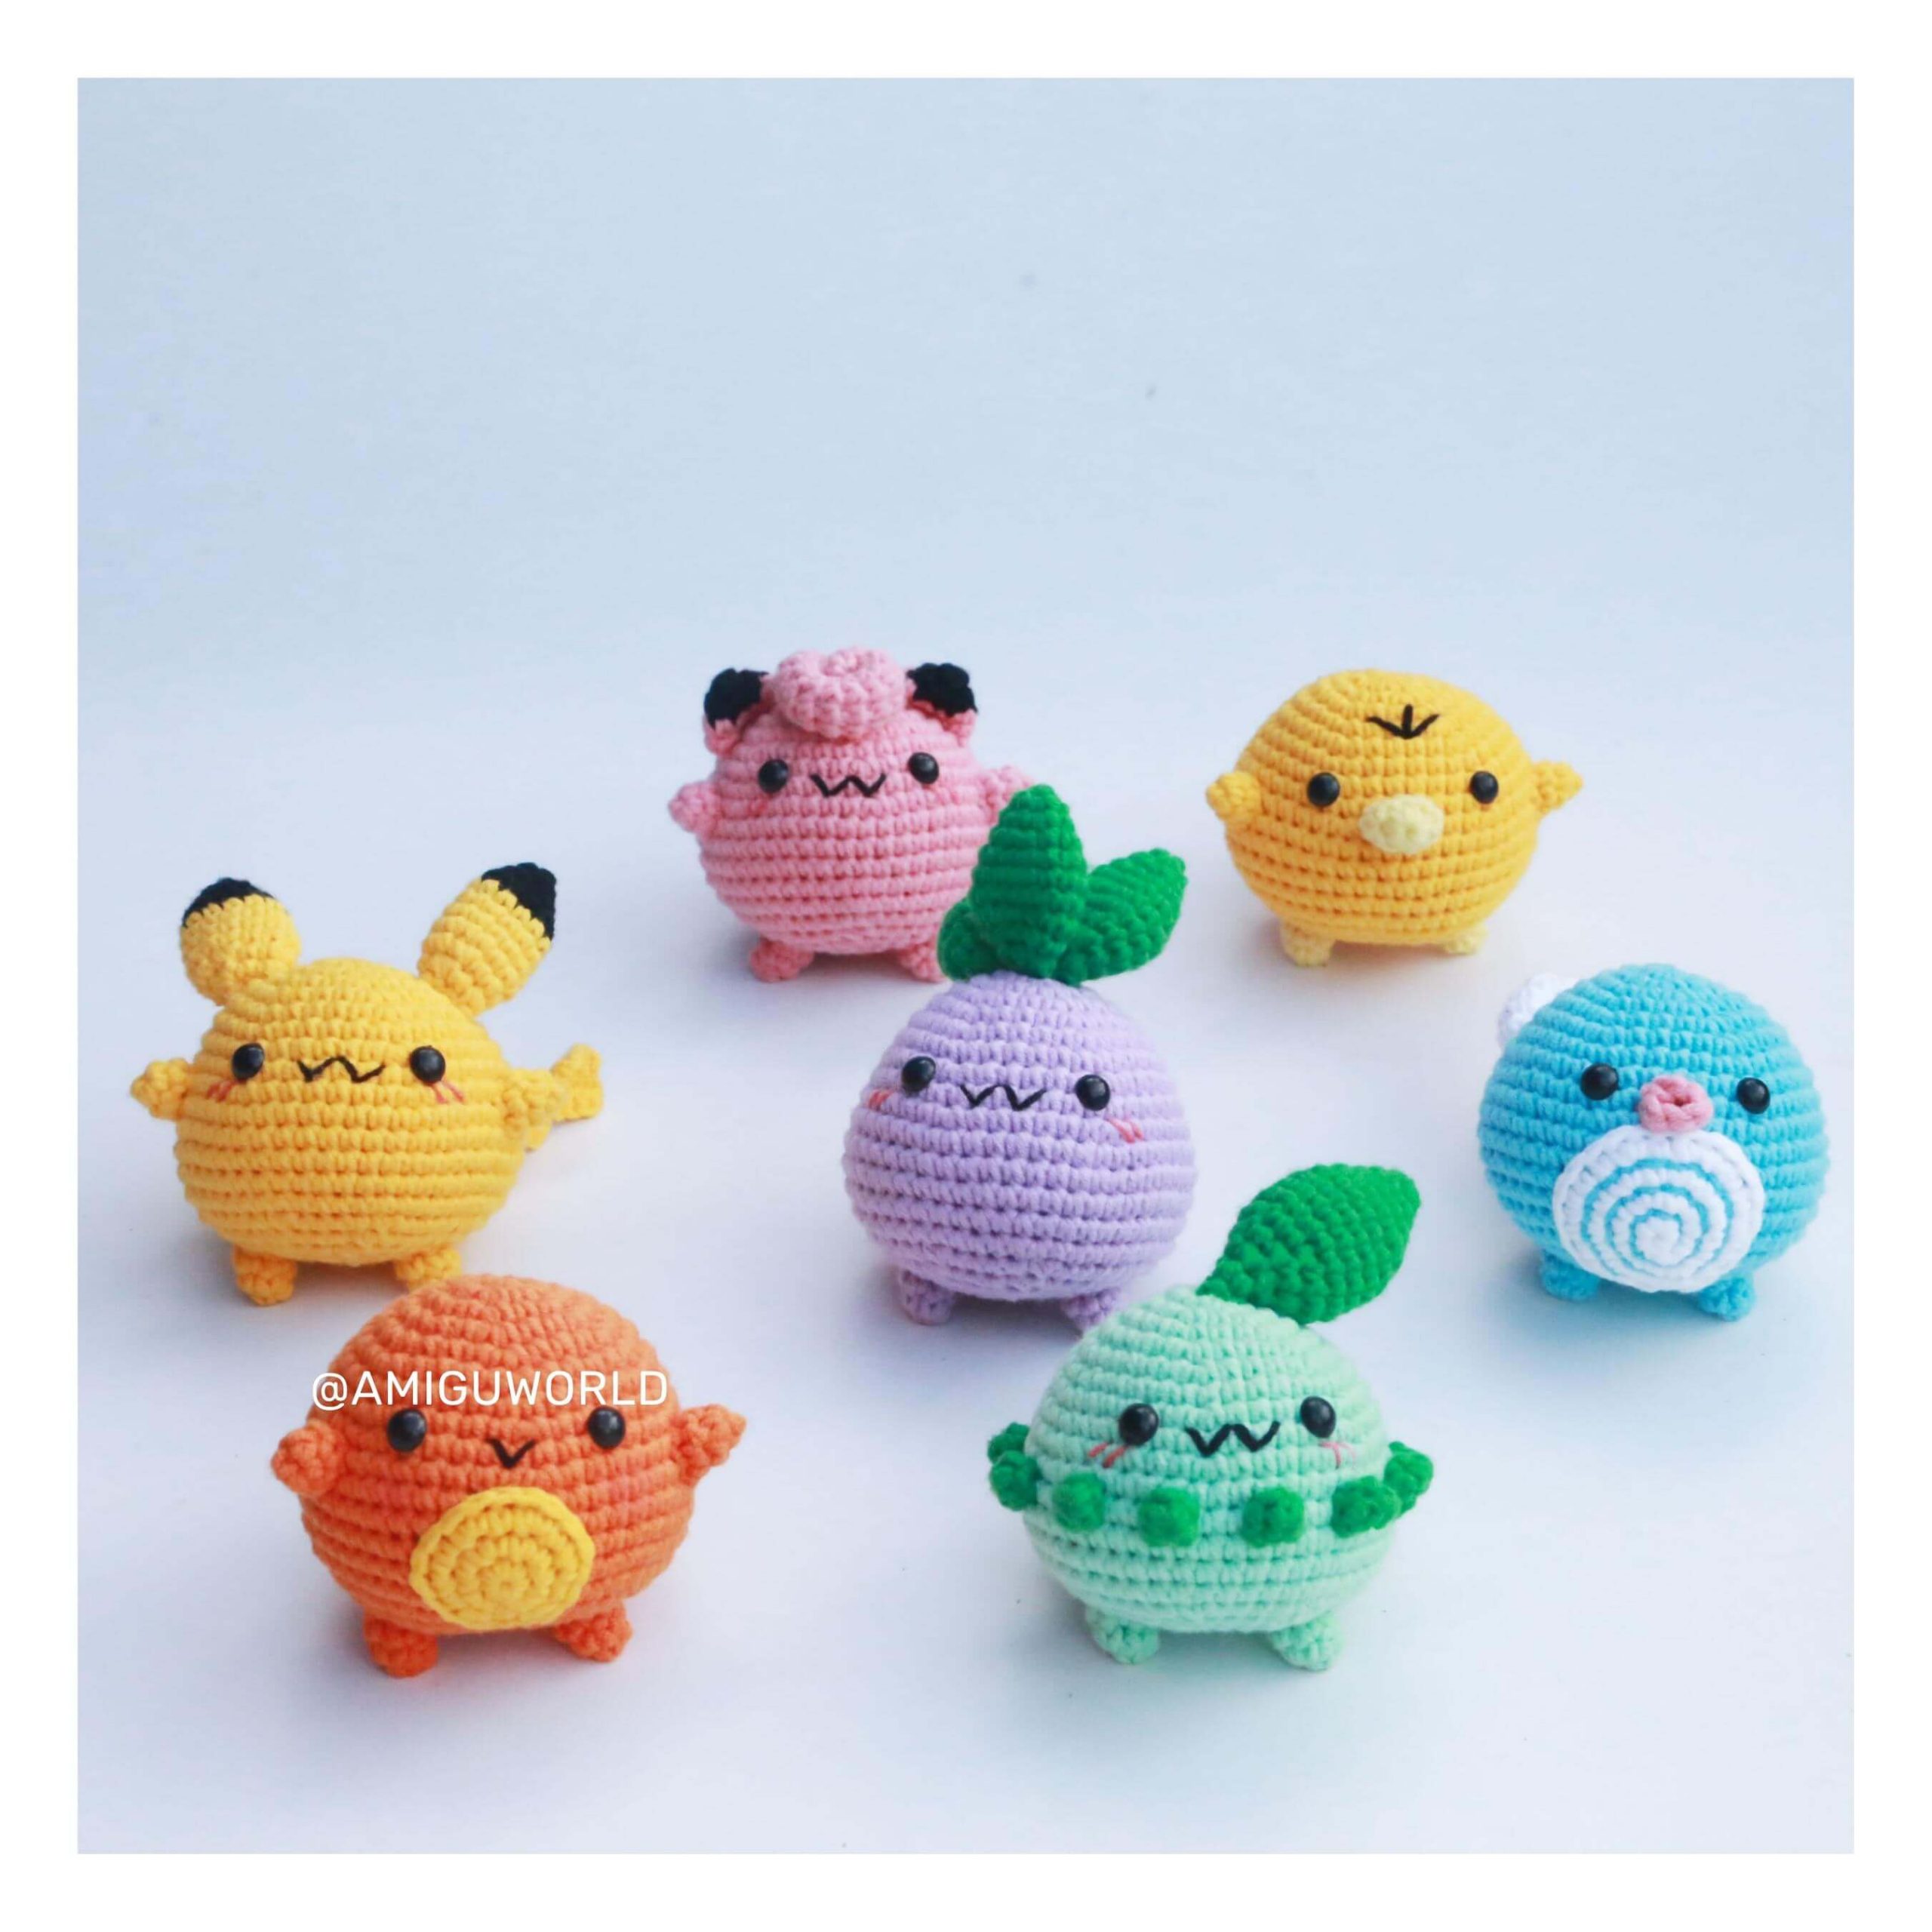 pikachu-amigurumi-crochet-pattern-by-amiguworld (14)